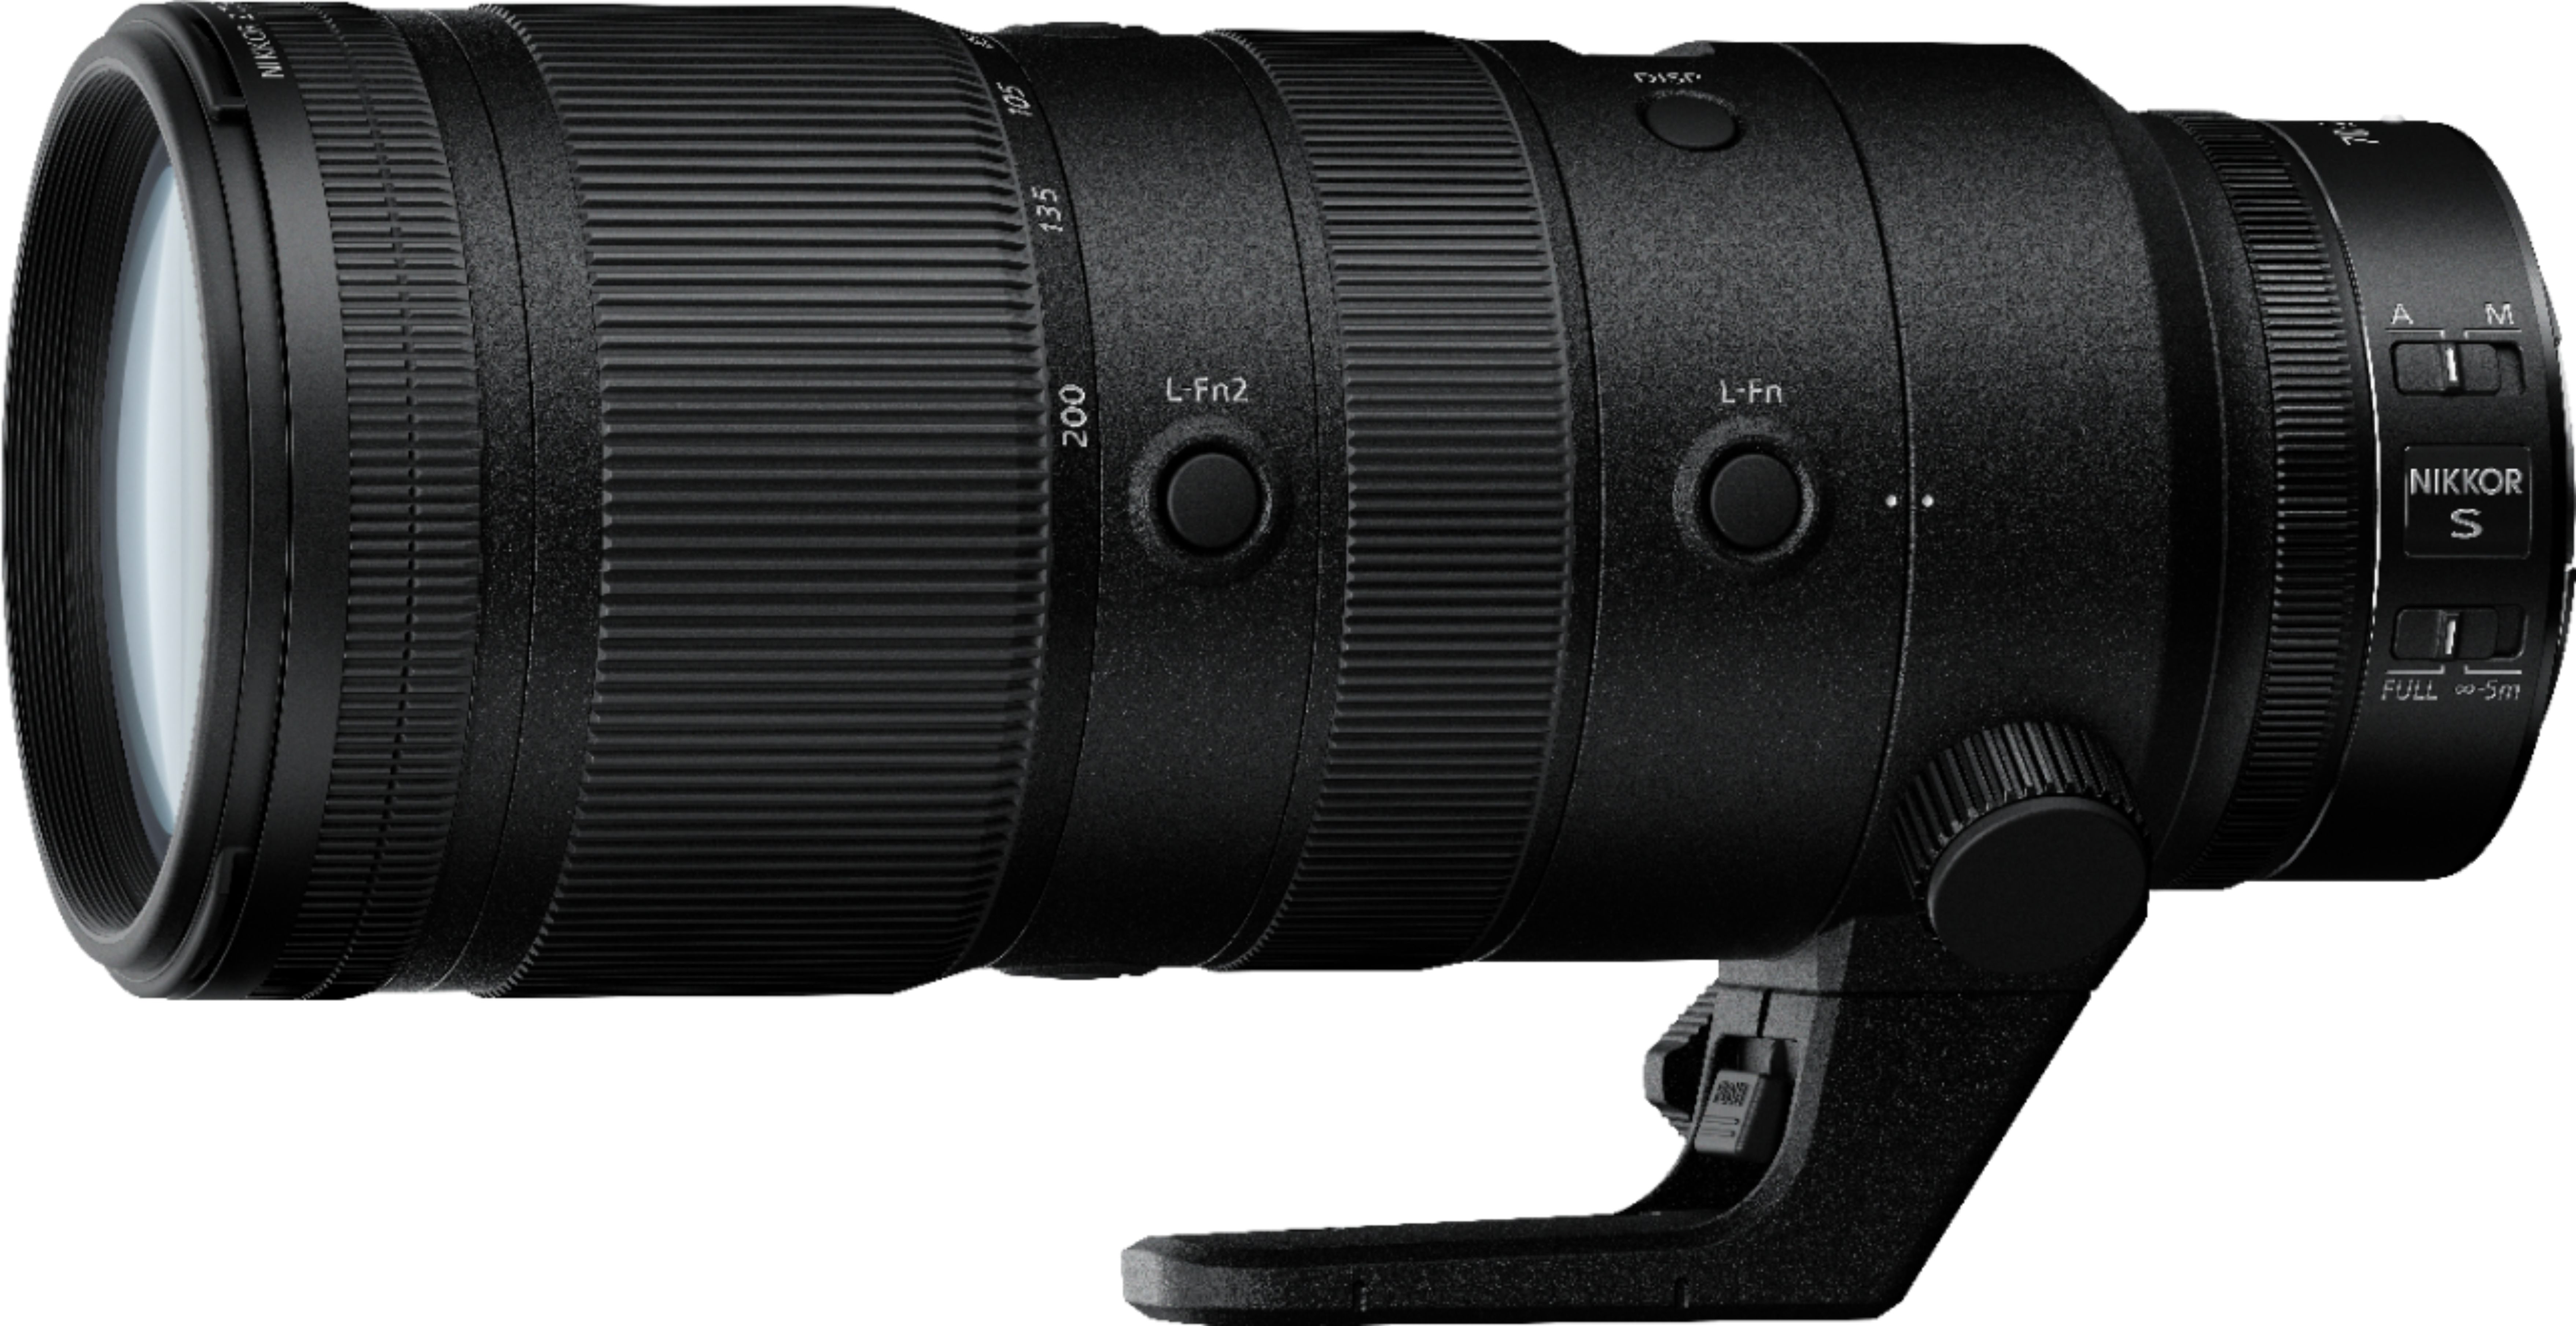 NIKKOR Z 70-200mm f/2.8 VR S Optical Telephoto Zoom Lens for Nikon